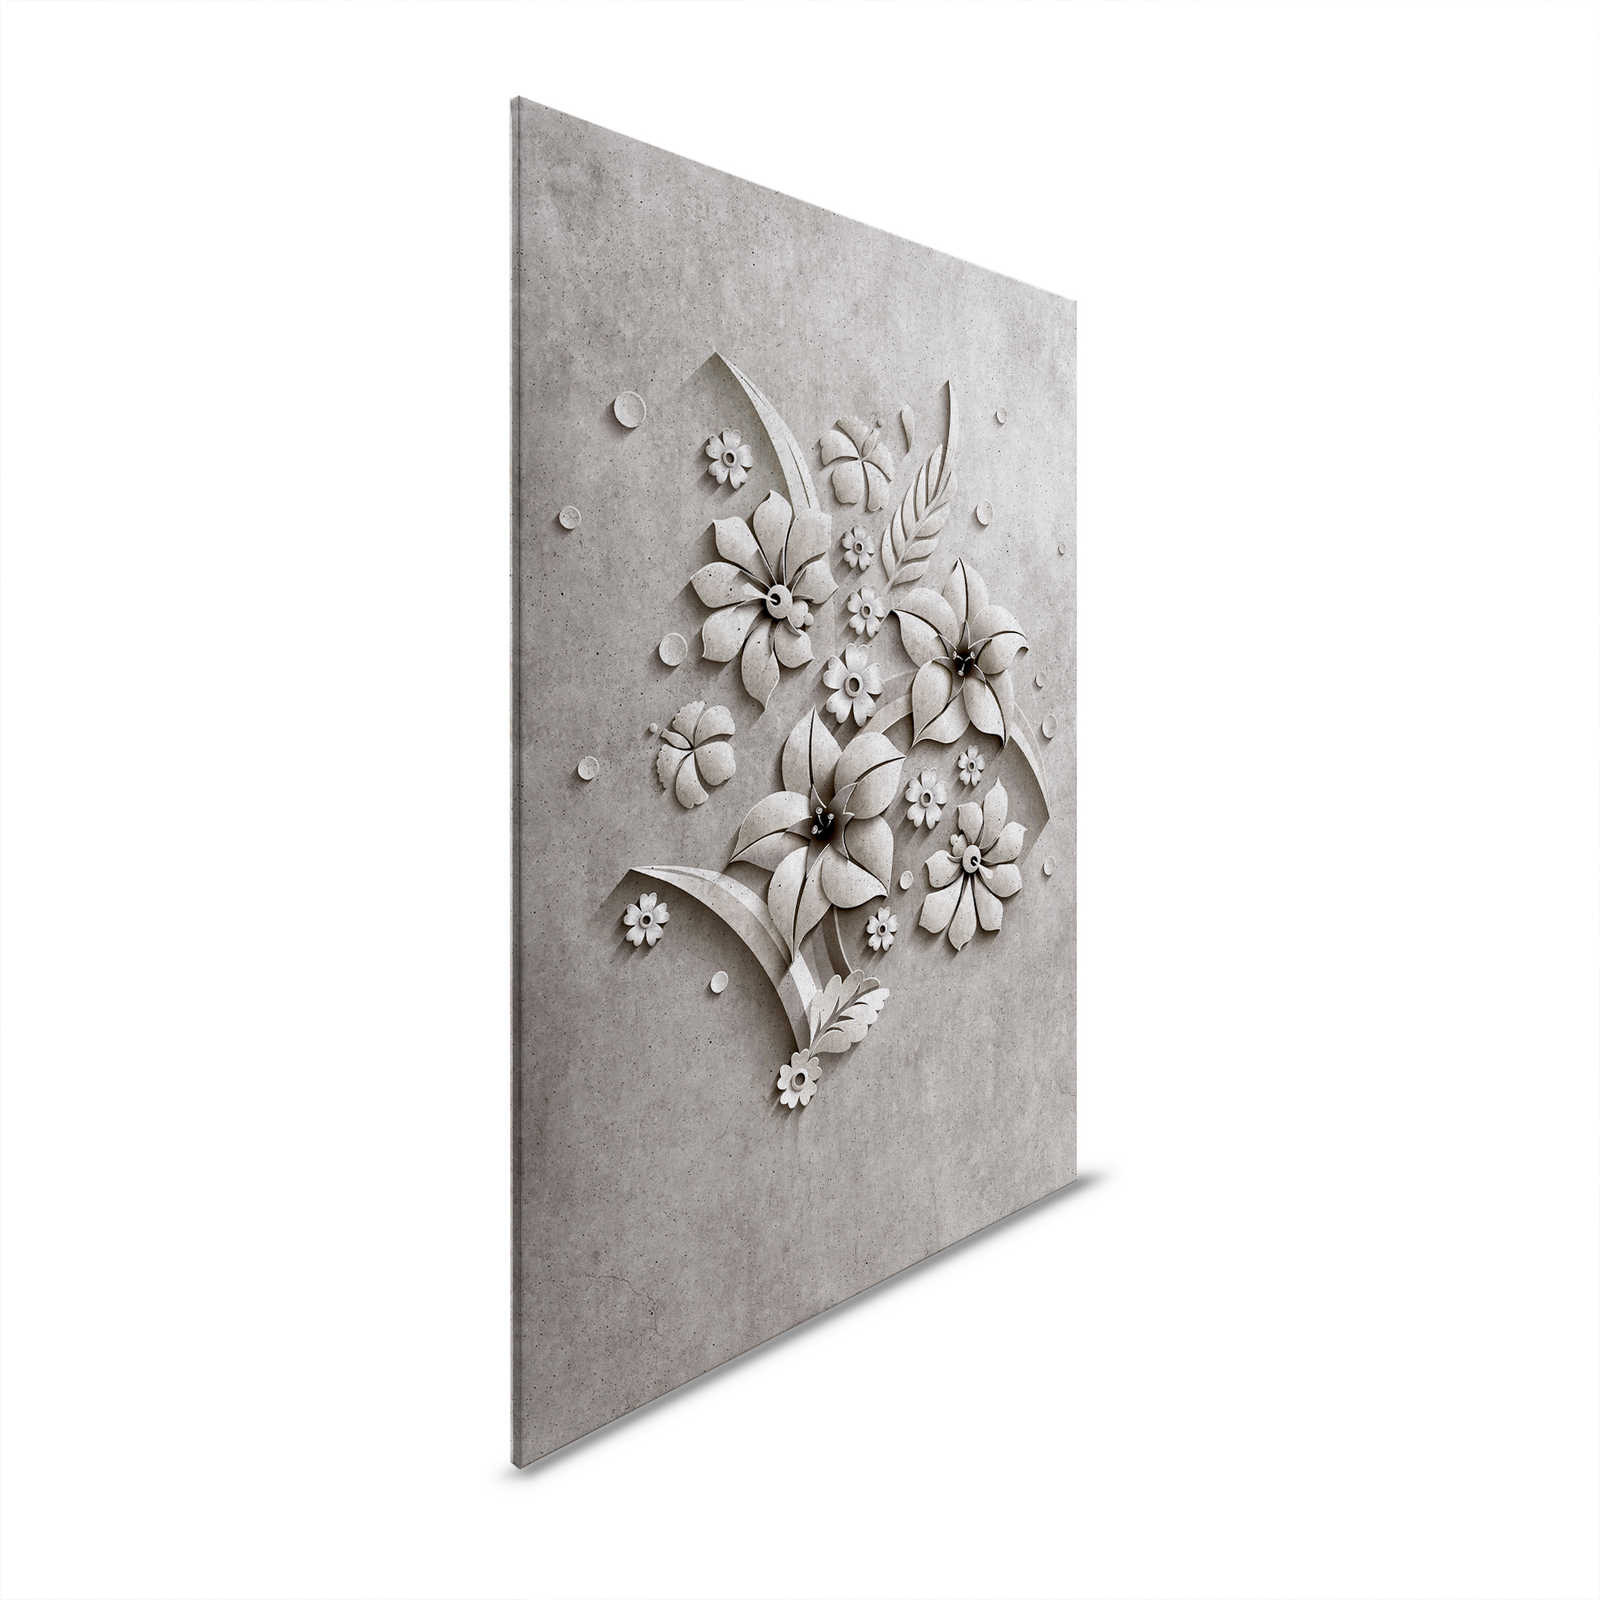 Relieve 1 - Pintura sobre lienzo en estructura de hormigón de un relieve floral - 0,90 m x 0,60 m
